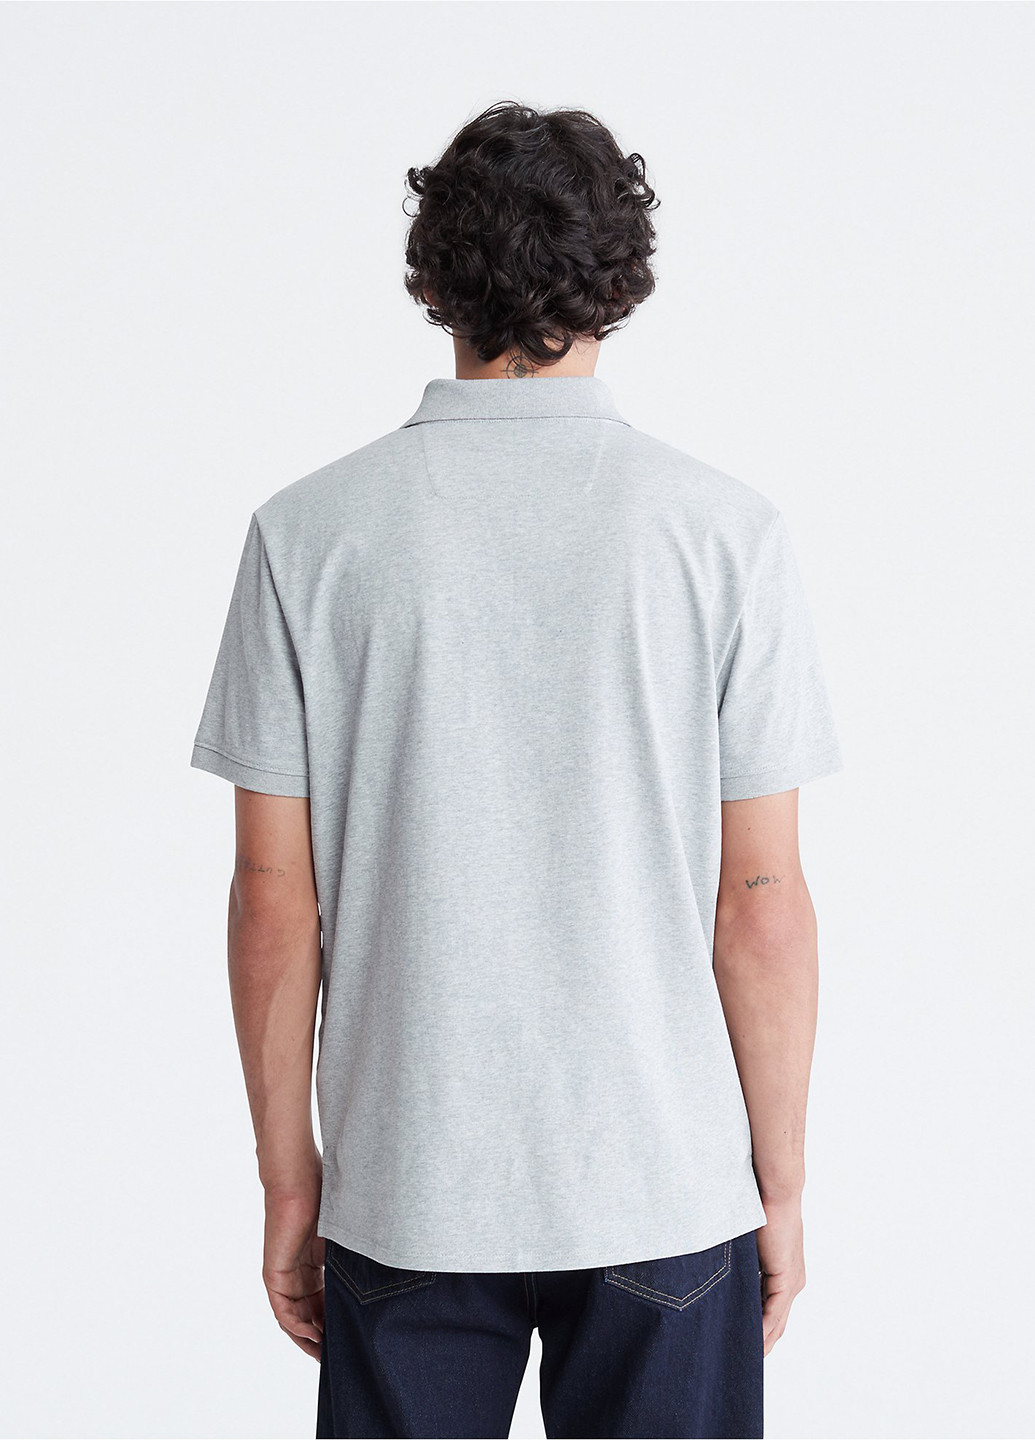 Серая футболка-поло для мужчин Calvin Klein однотонная